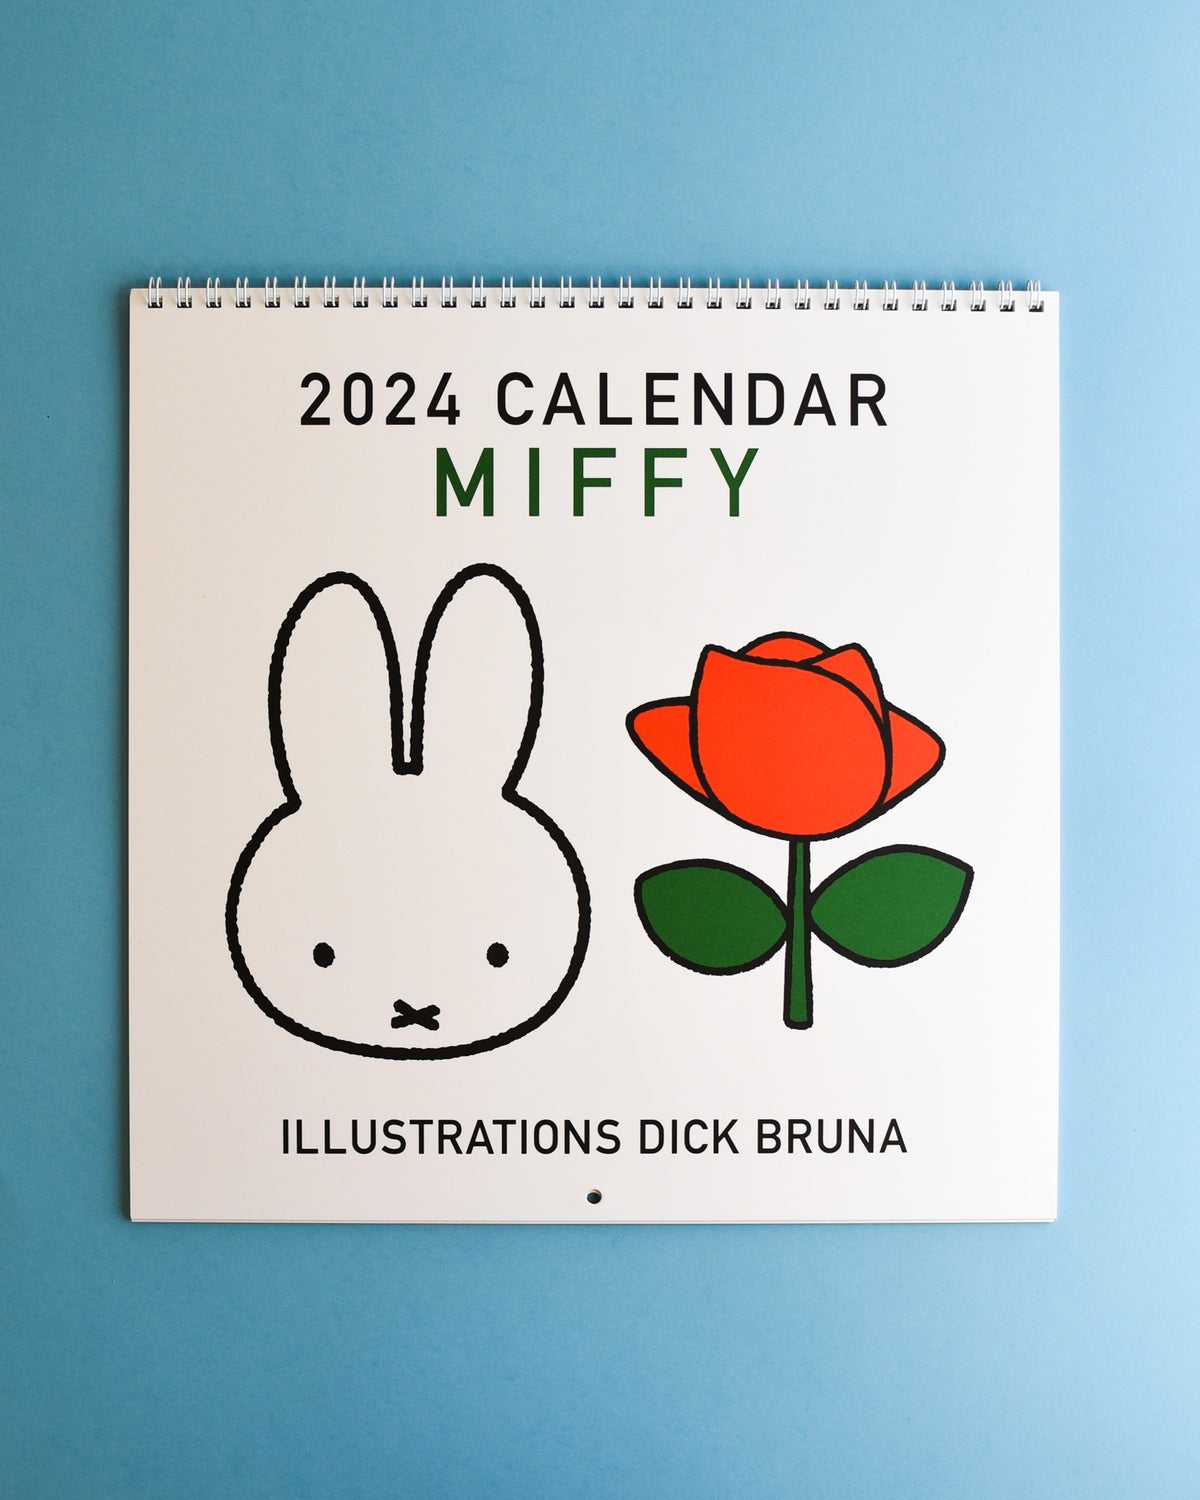 Everyone loves a dea! Make sure you shop for Miffy Calendar 2024 Miffy